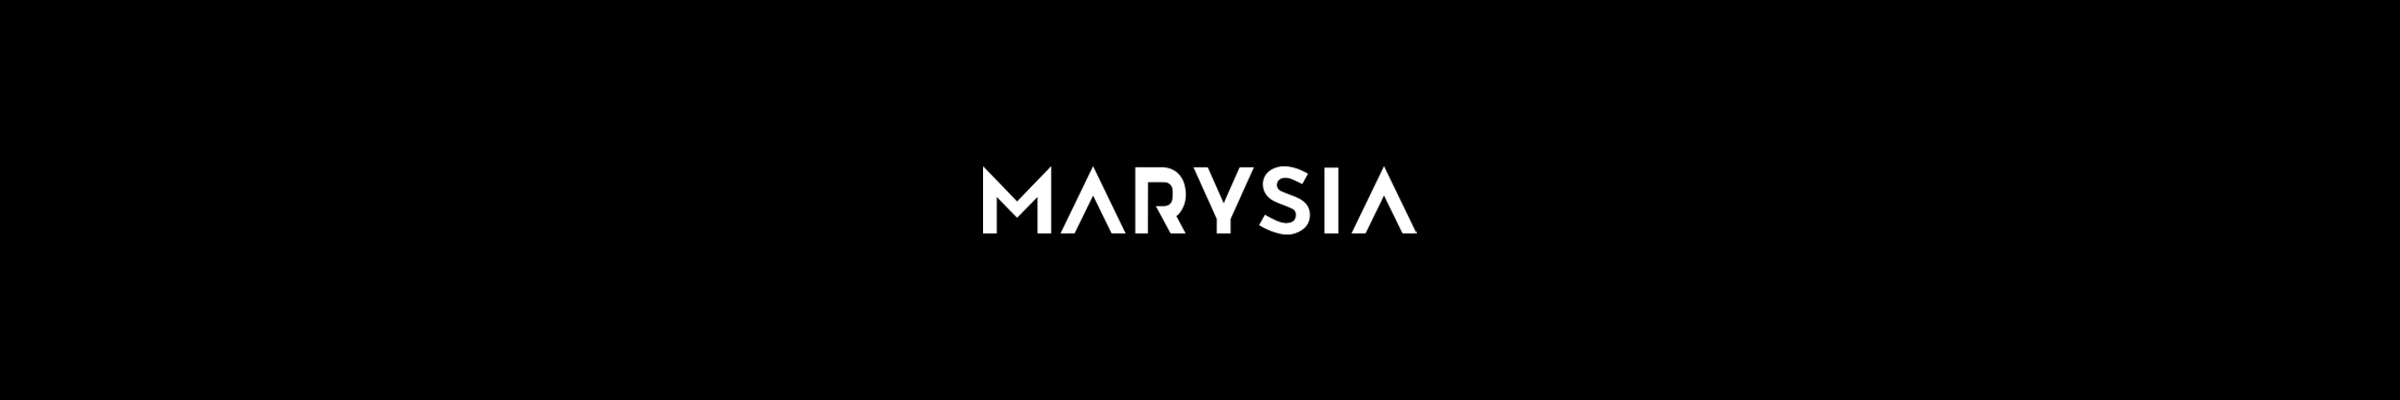 marysia-banner